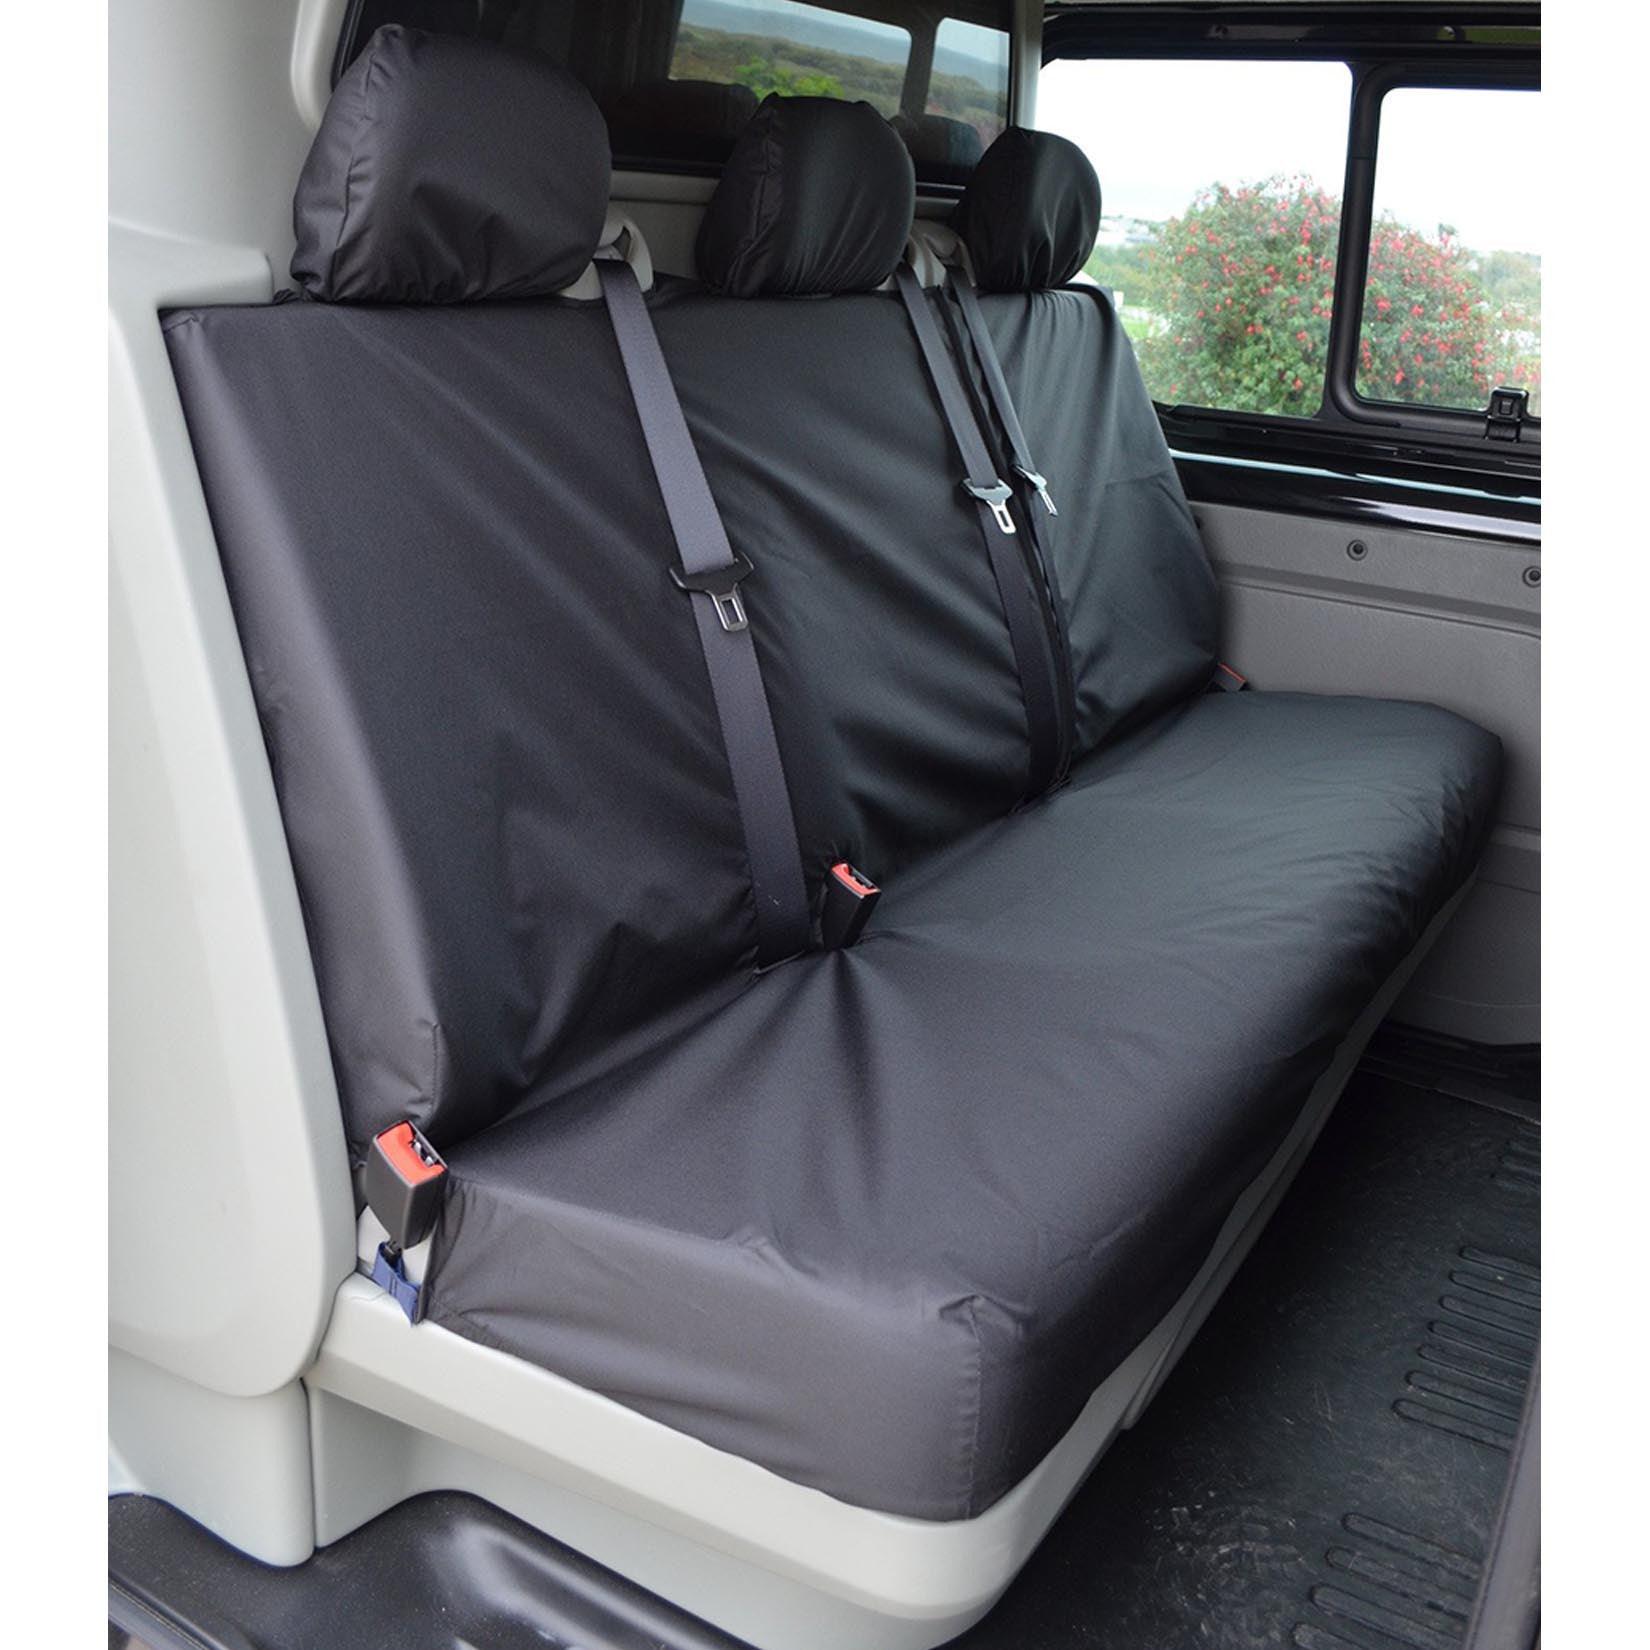 NISSAN PRIMASTAR 2002-2014 CREW CAB BENCH SEAT COVERS - BLACK - Storm Xccessories2